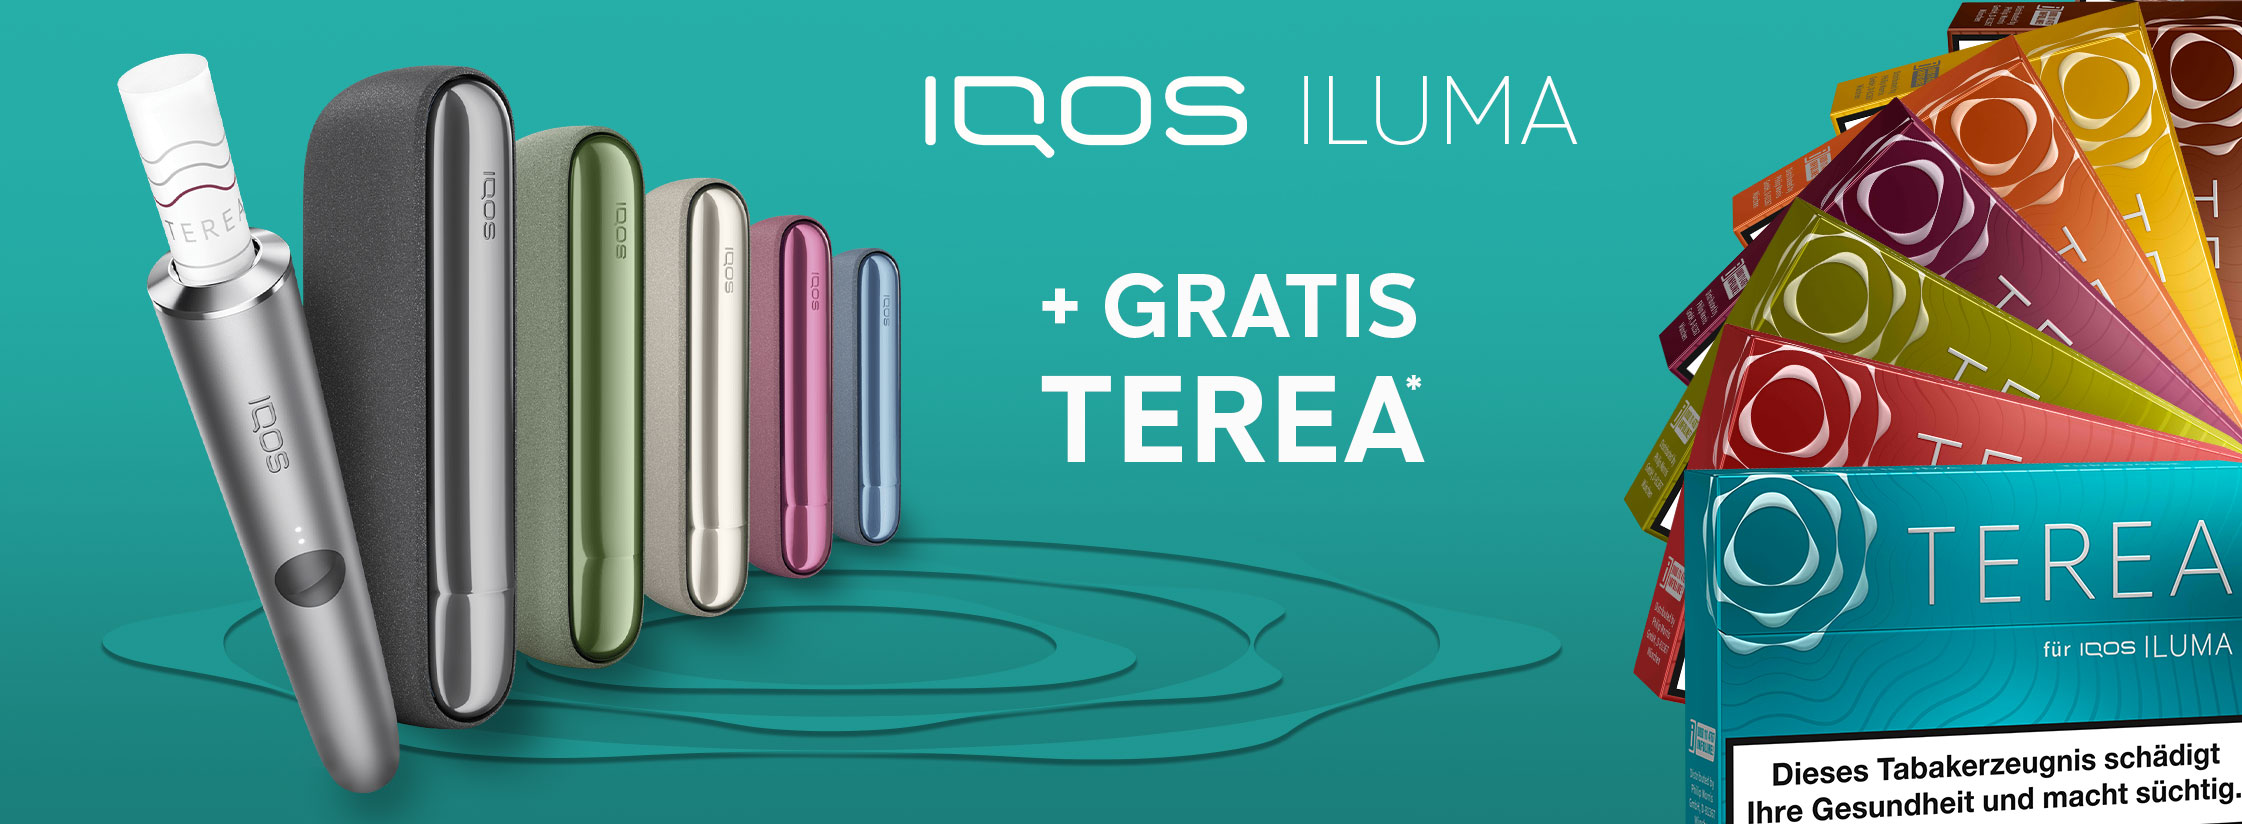 IQOS Iluma One Pebble Grey (grau) + gratis TEREA kaufen